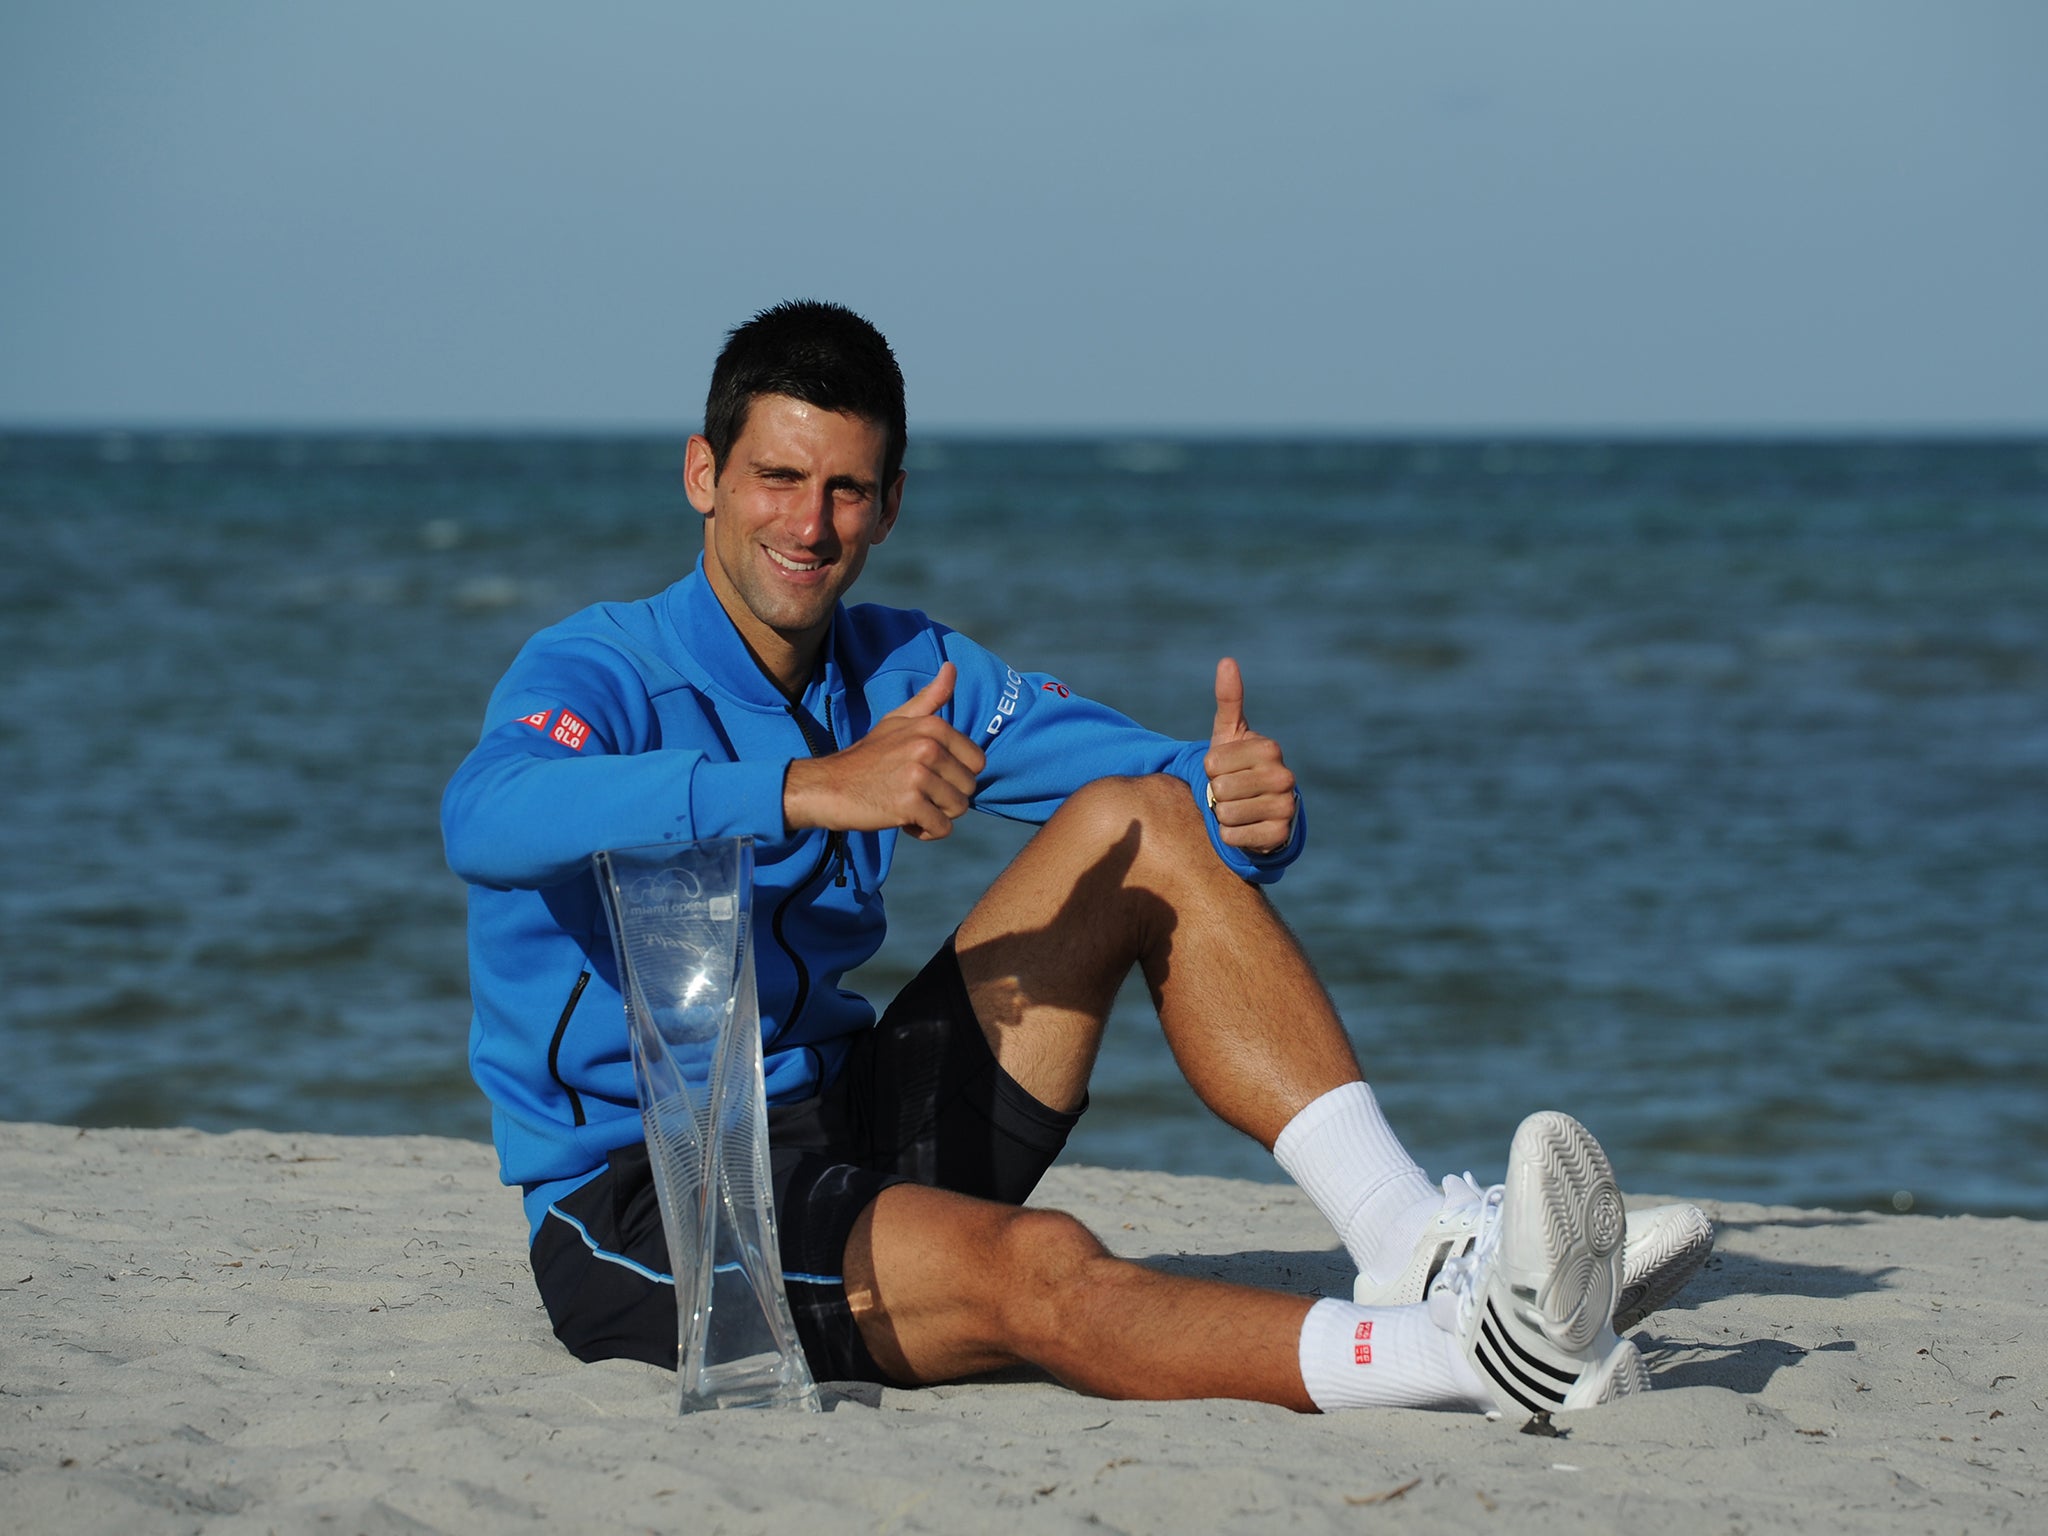 Novak Djokovic enjoys his victory in Sunday’s Miami Masters by taking a quick trip to Miami Beach on Monday